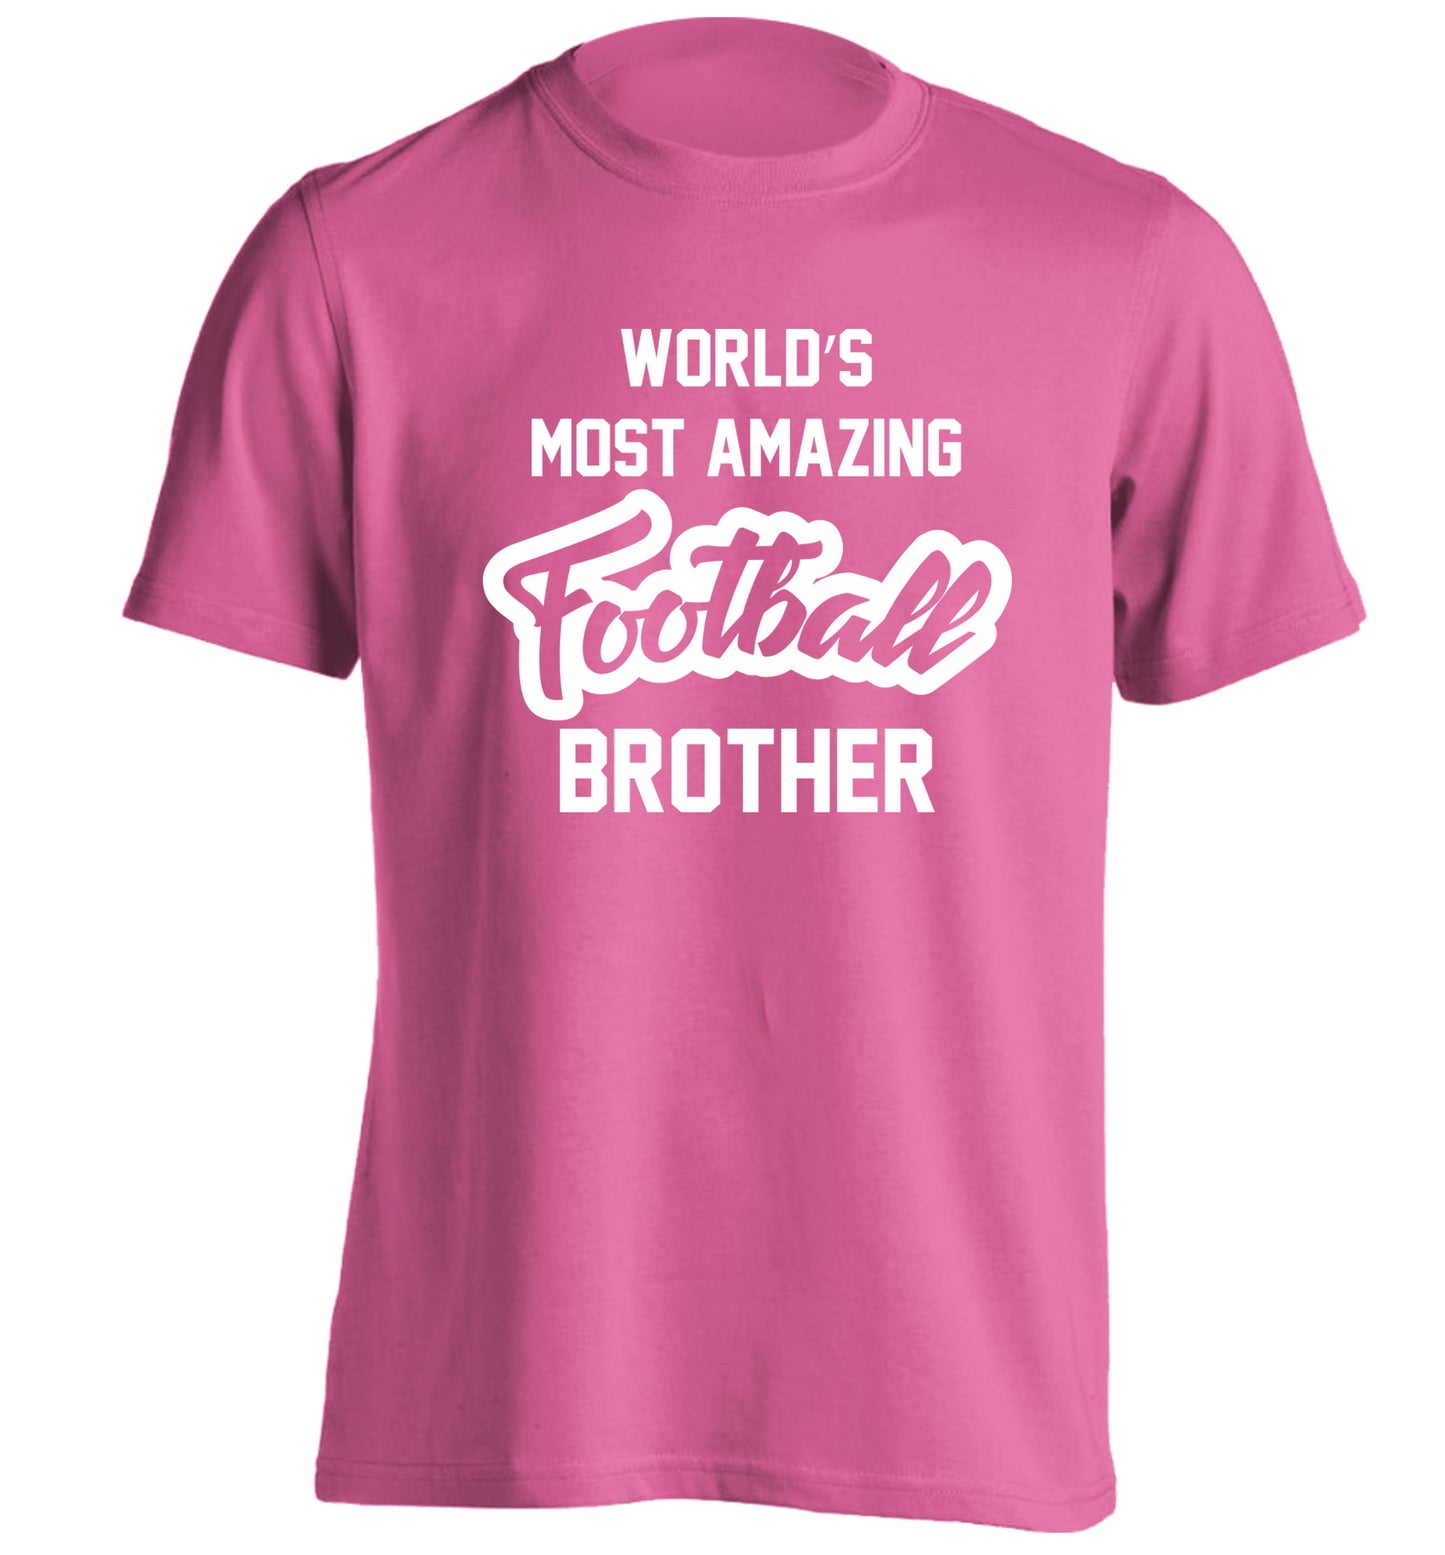 Worlds most amazing football brother adults unisexpink Tshirt 2XL